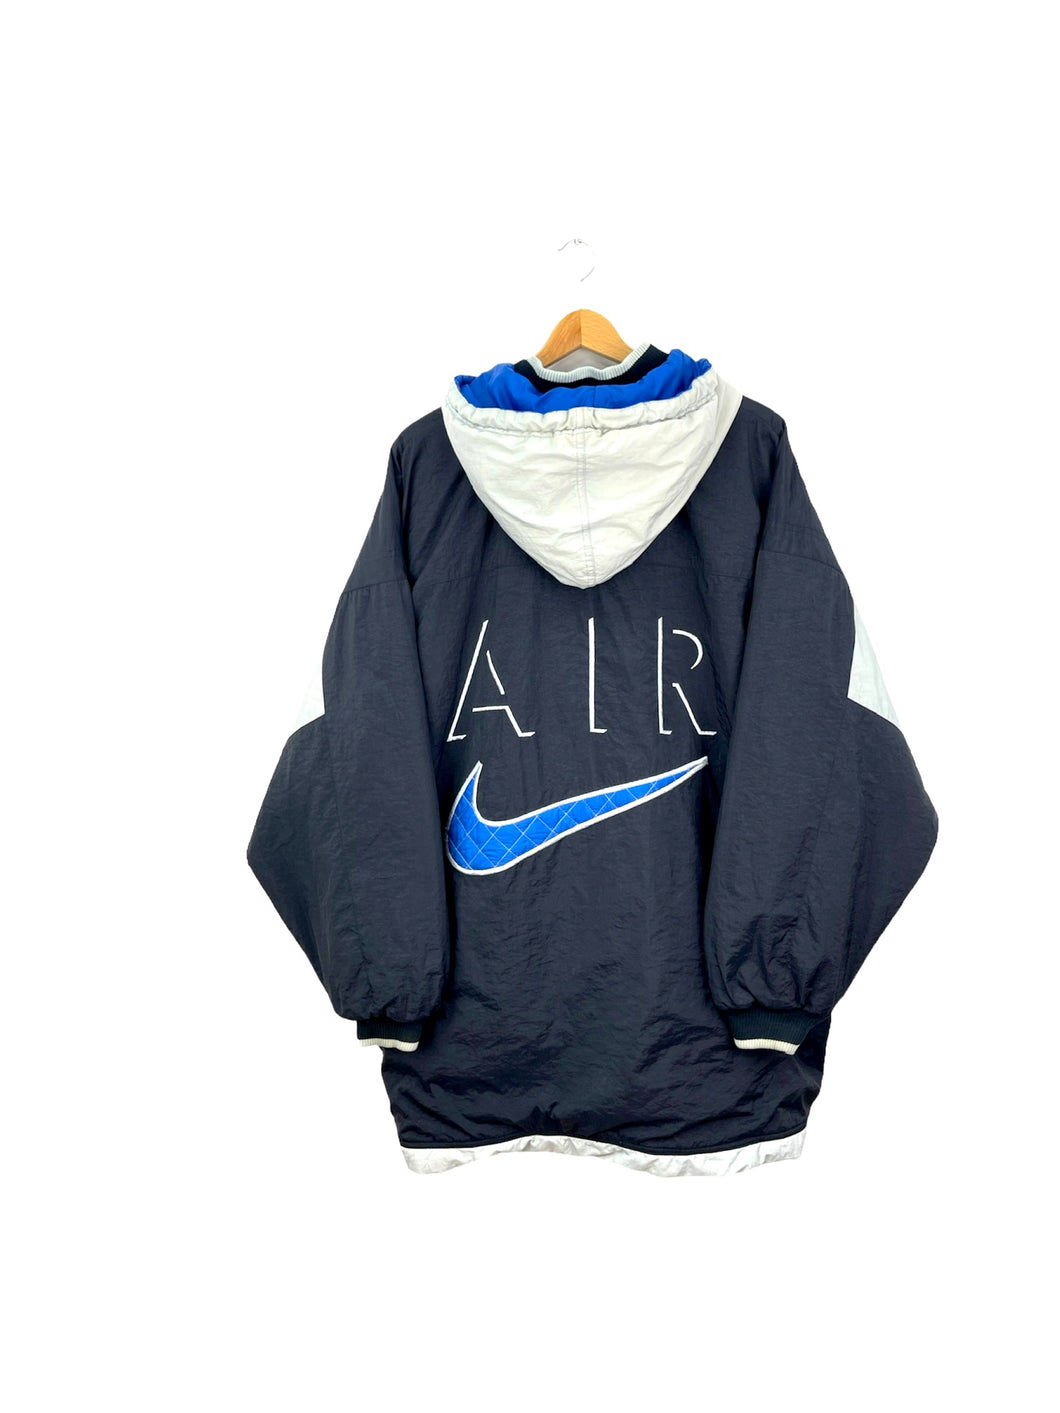 Nike Air Coat - XLarge